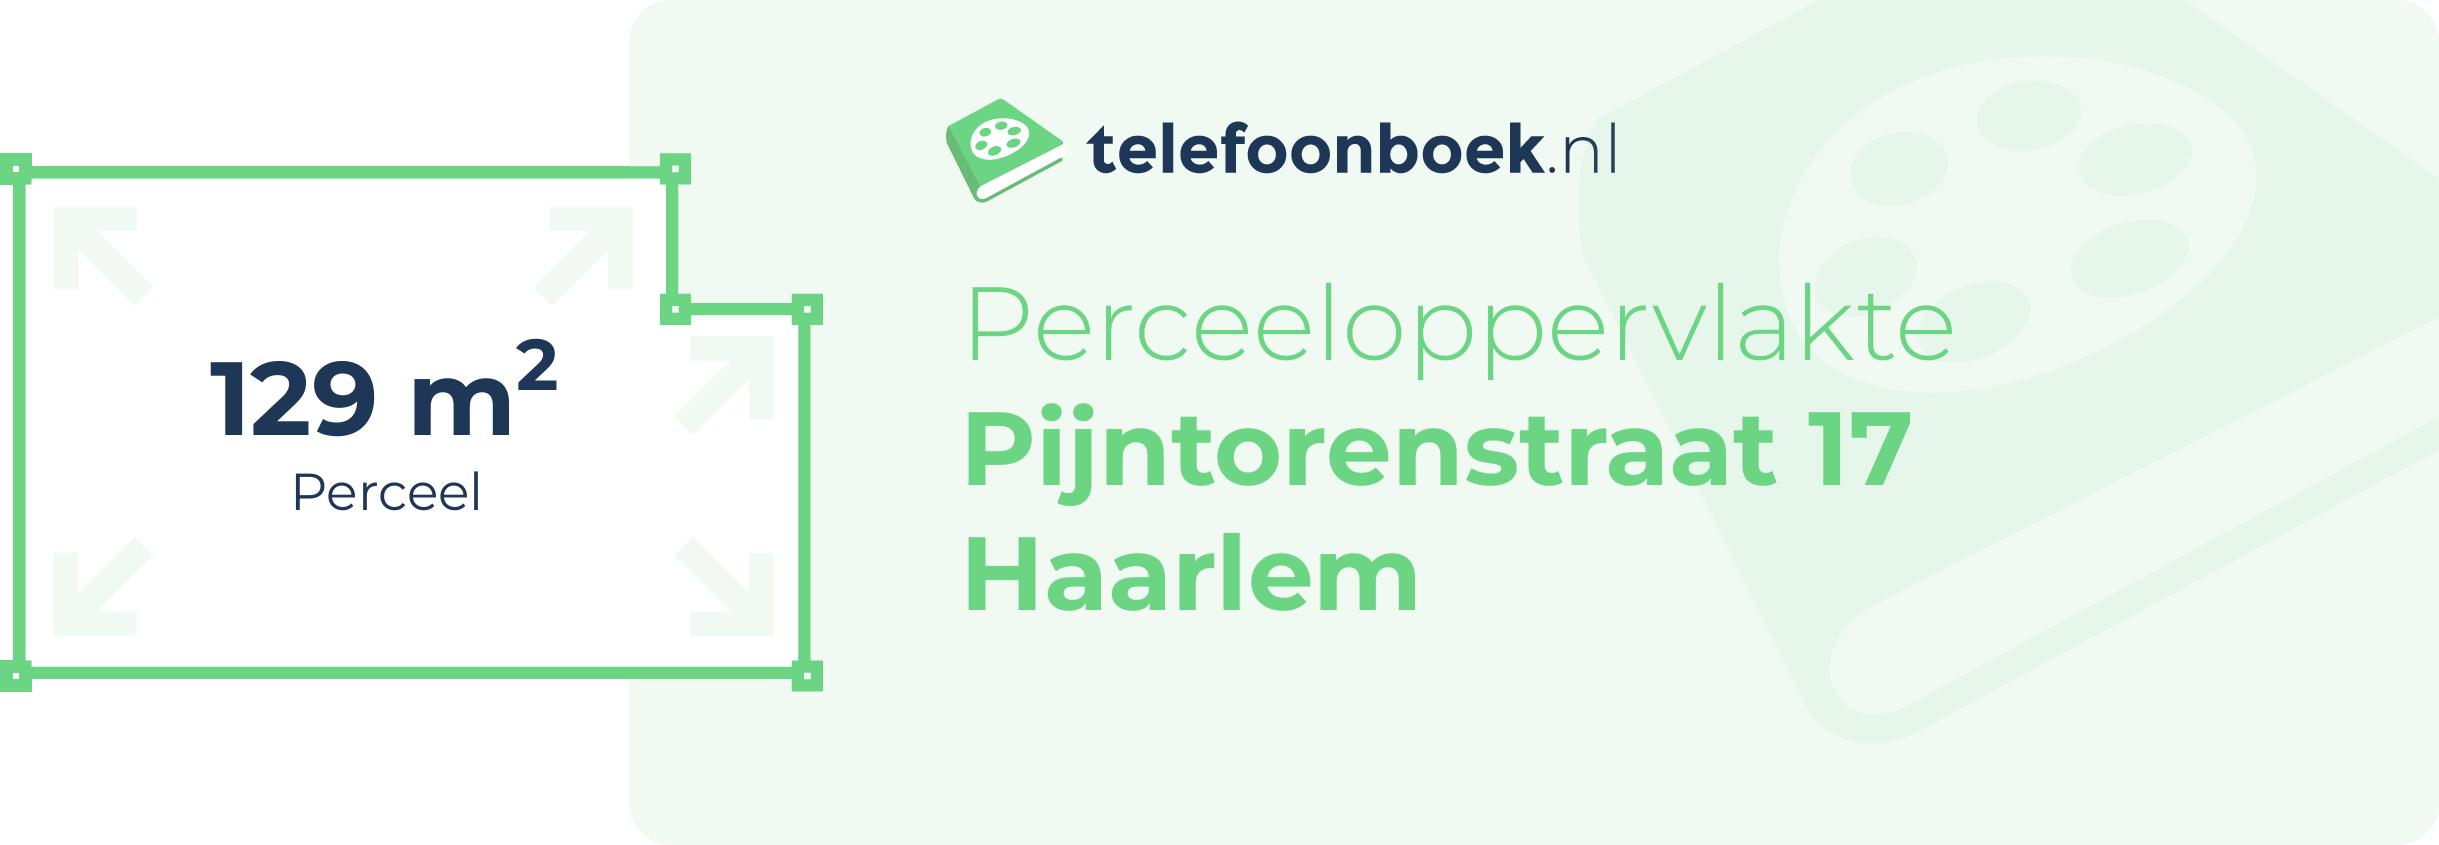 Perceeloppervlakte Pijntorenstraat 17 Haarlem